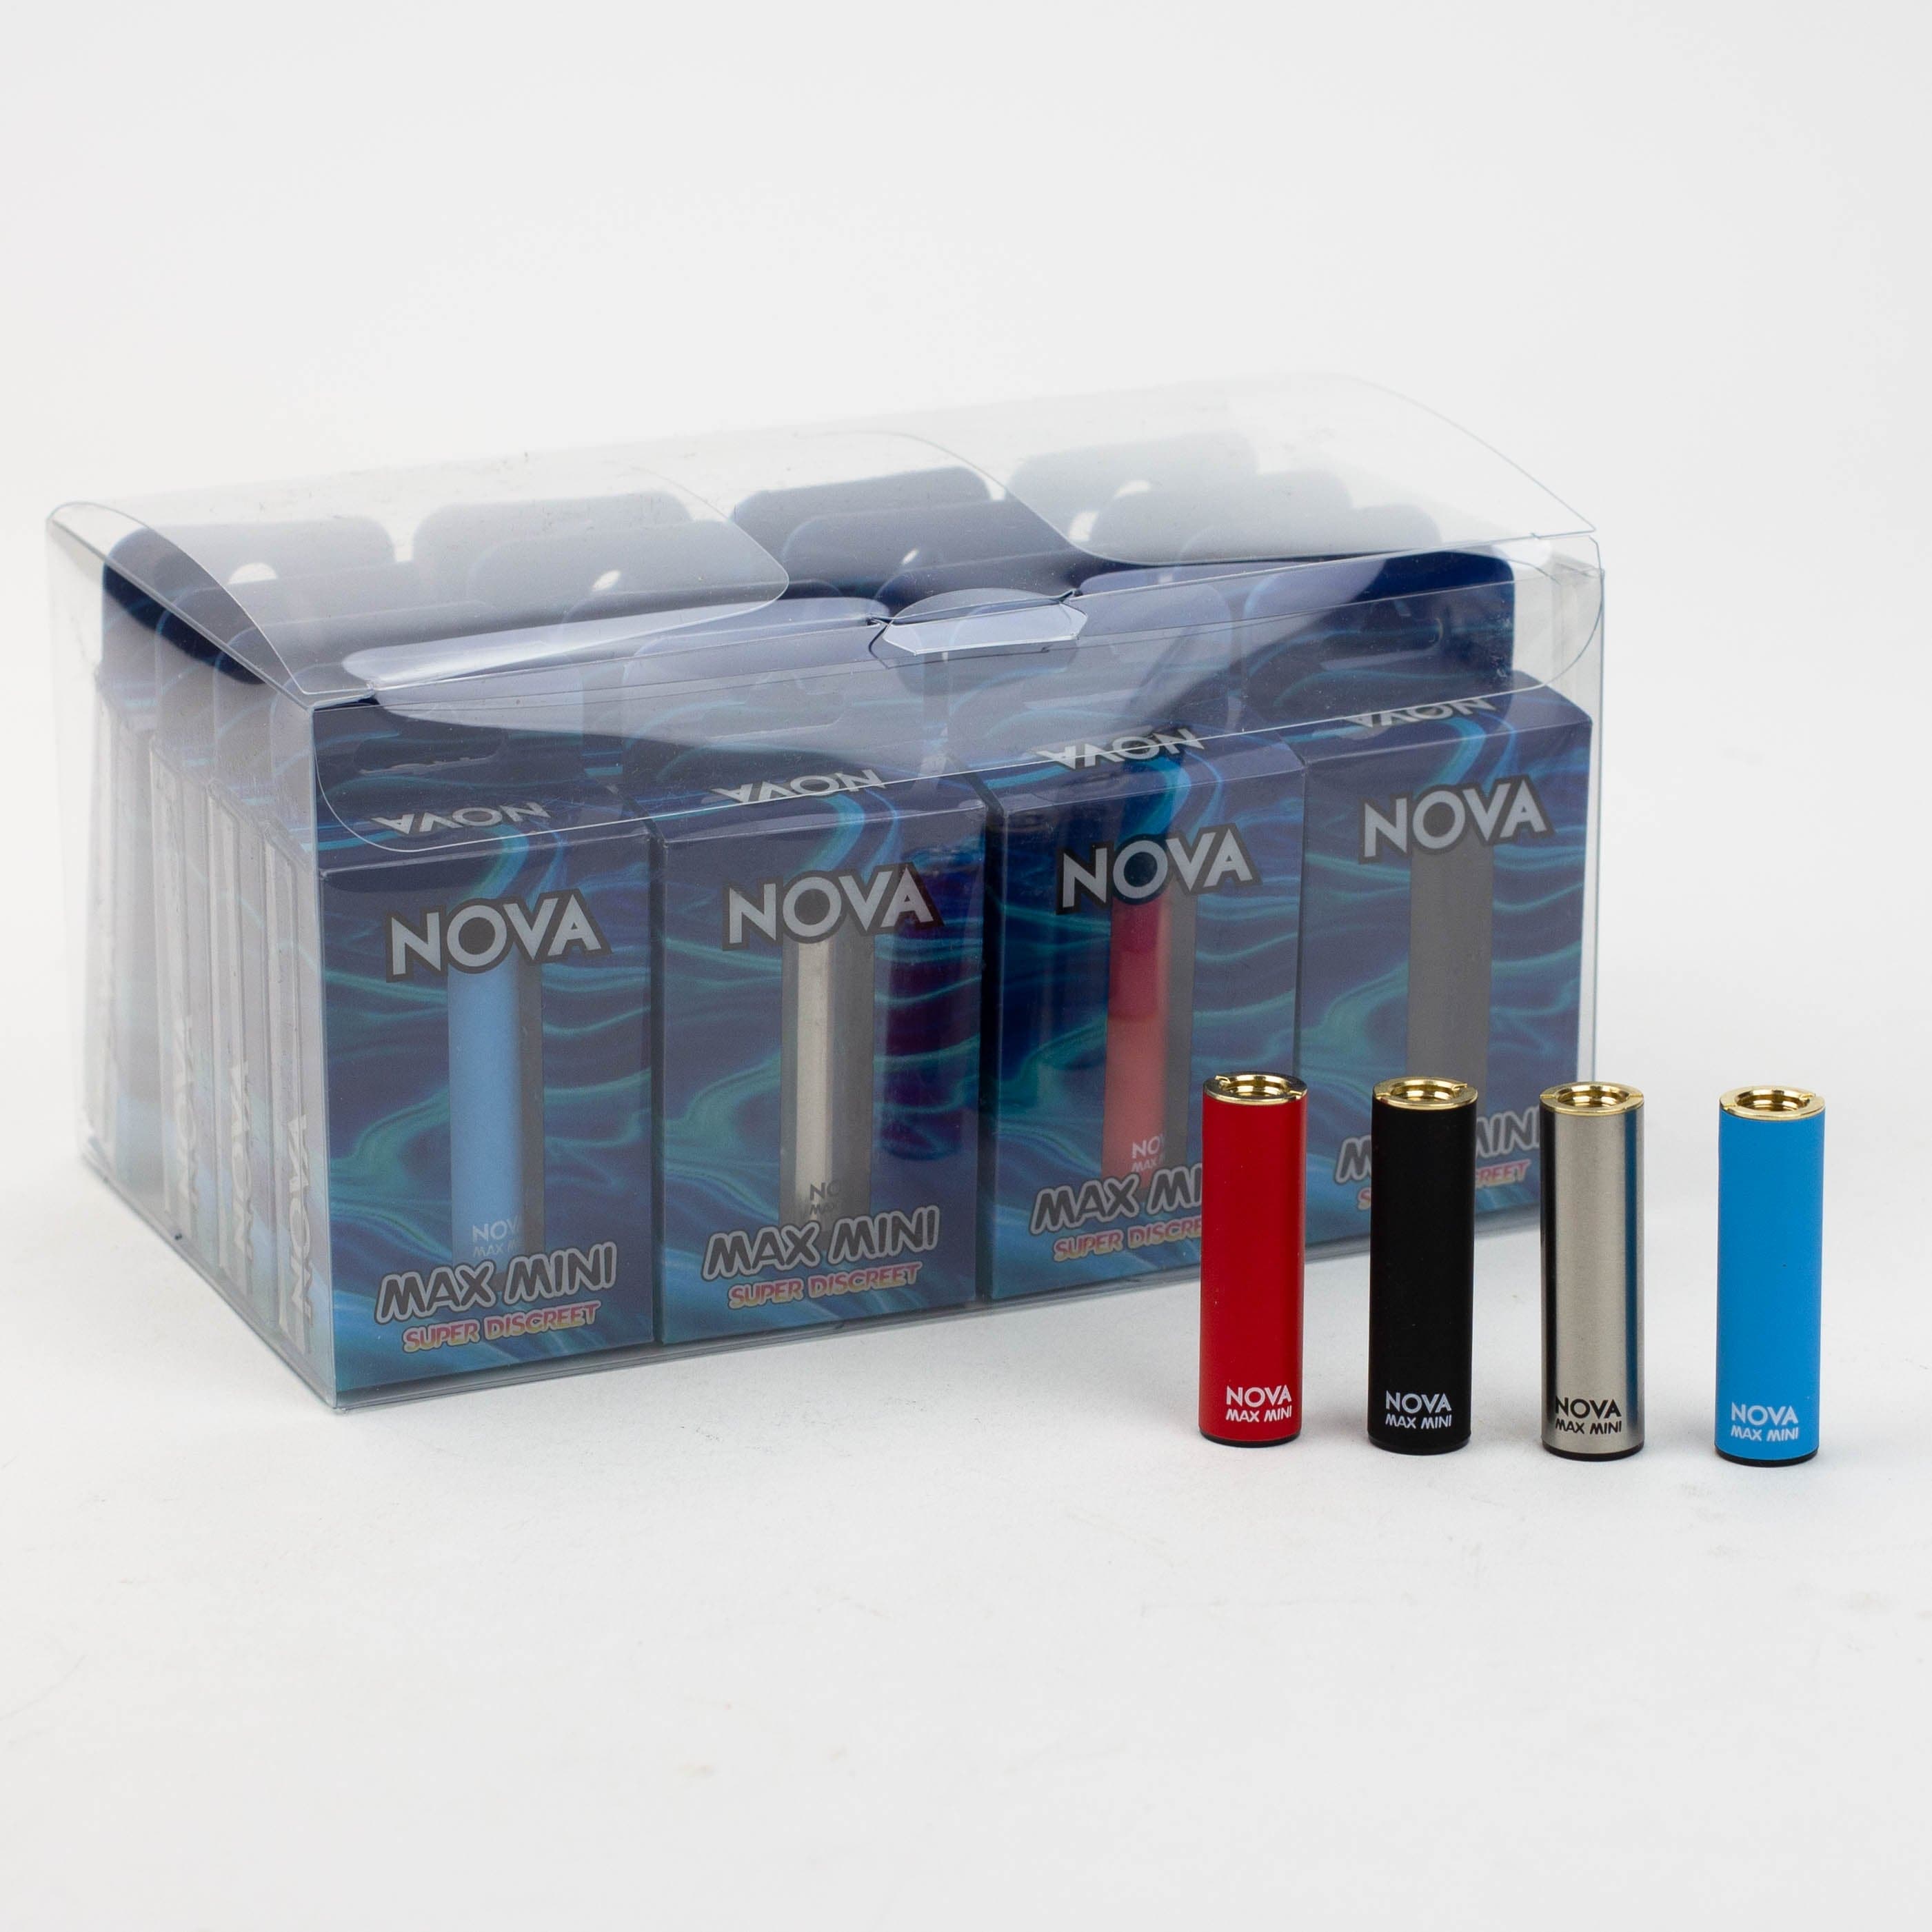 Nova Max Mini Vape Battery with USB charger Display of 20